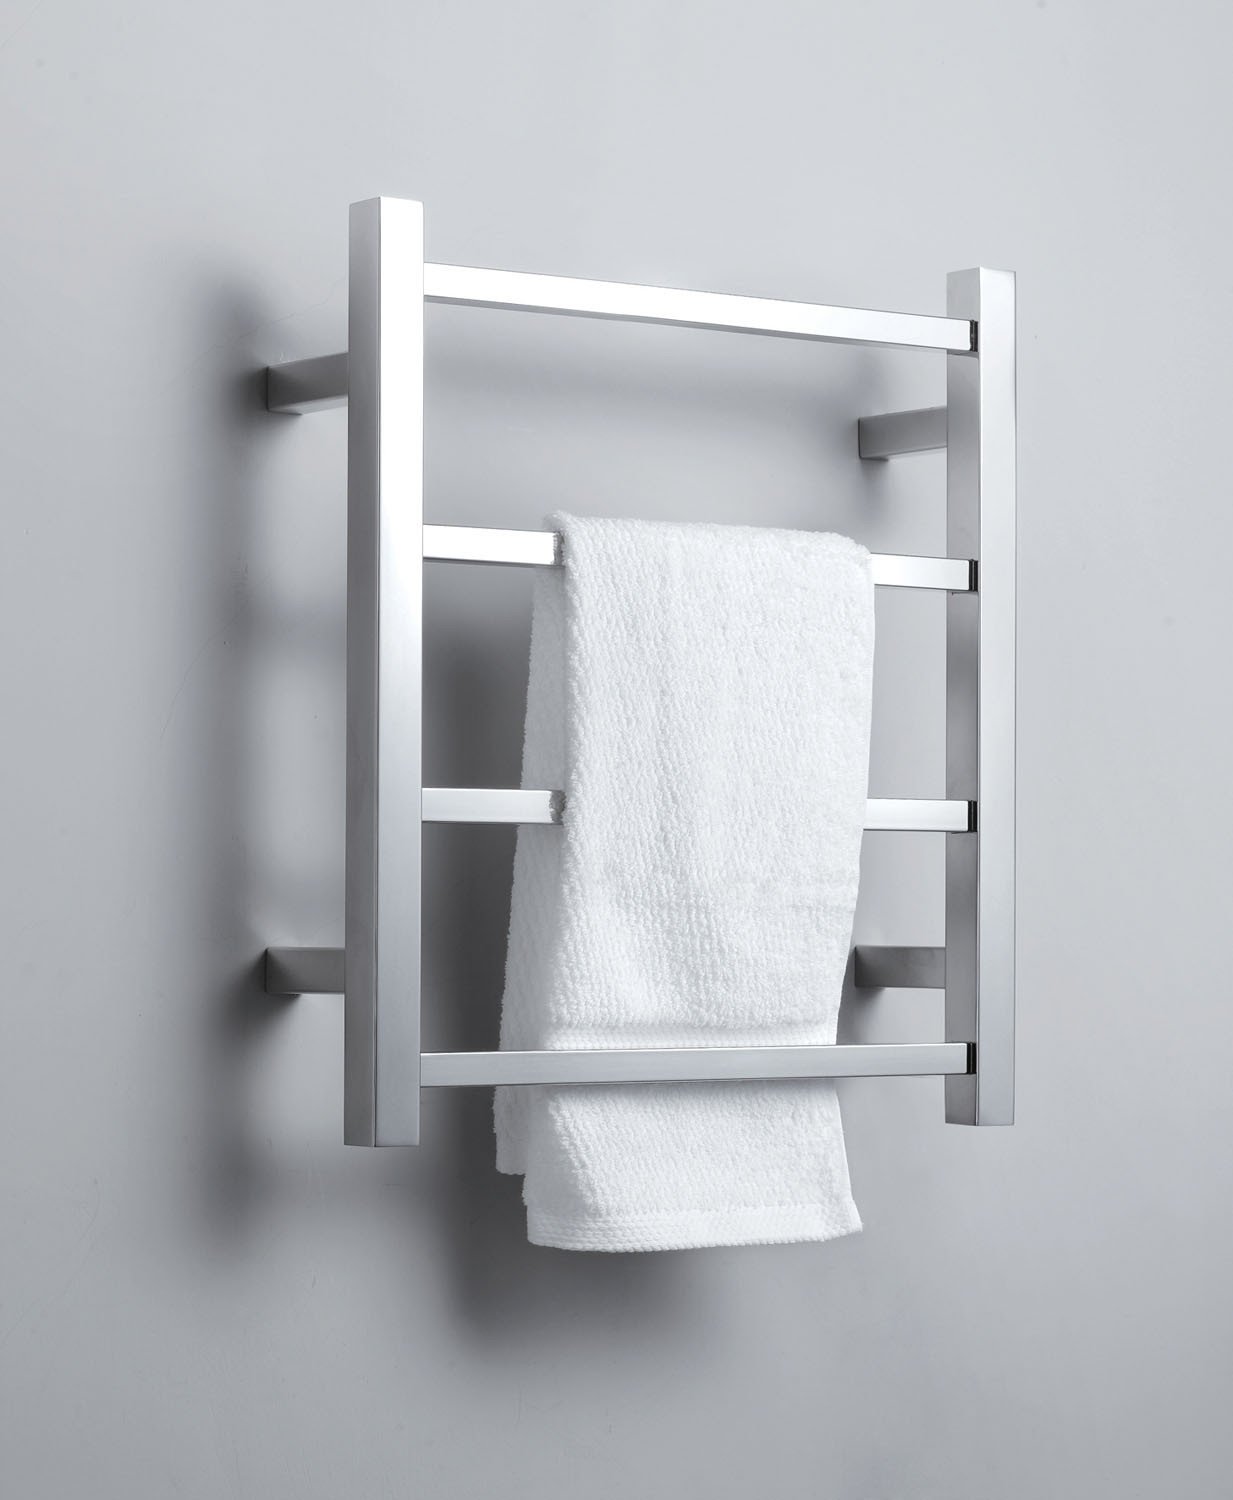 Virtu USA Koze 120 Wall Mounted Electric Towel Warmer in Brushed Nickel Towel Warmers Virtu USA 